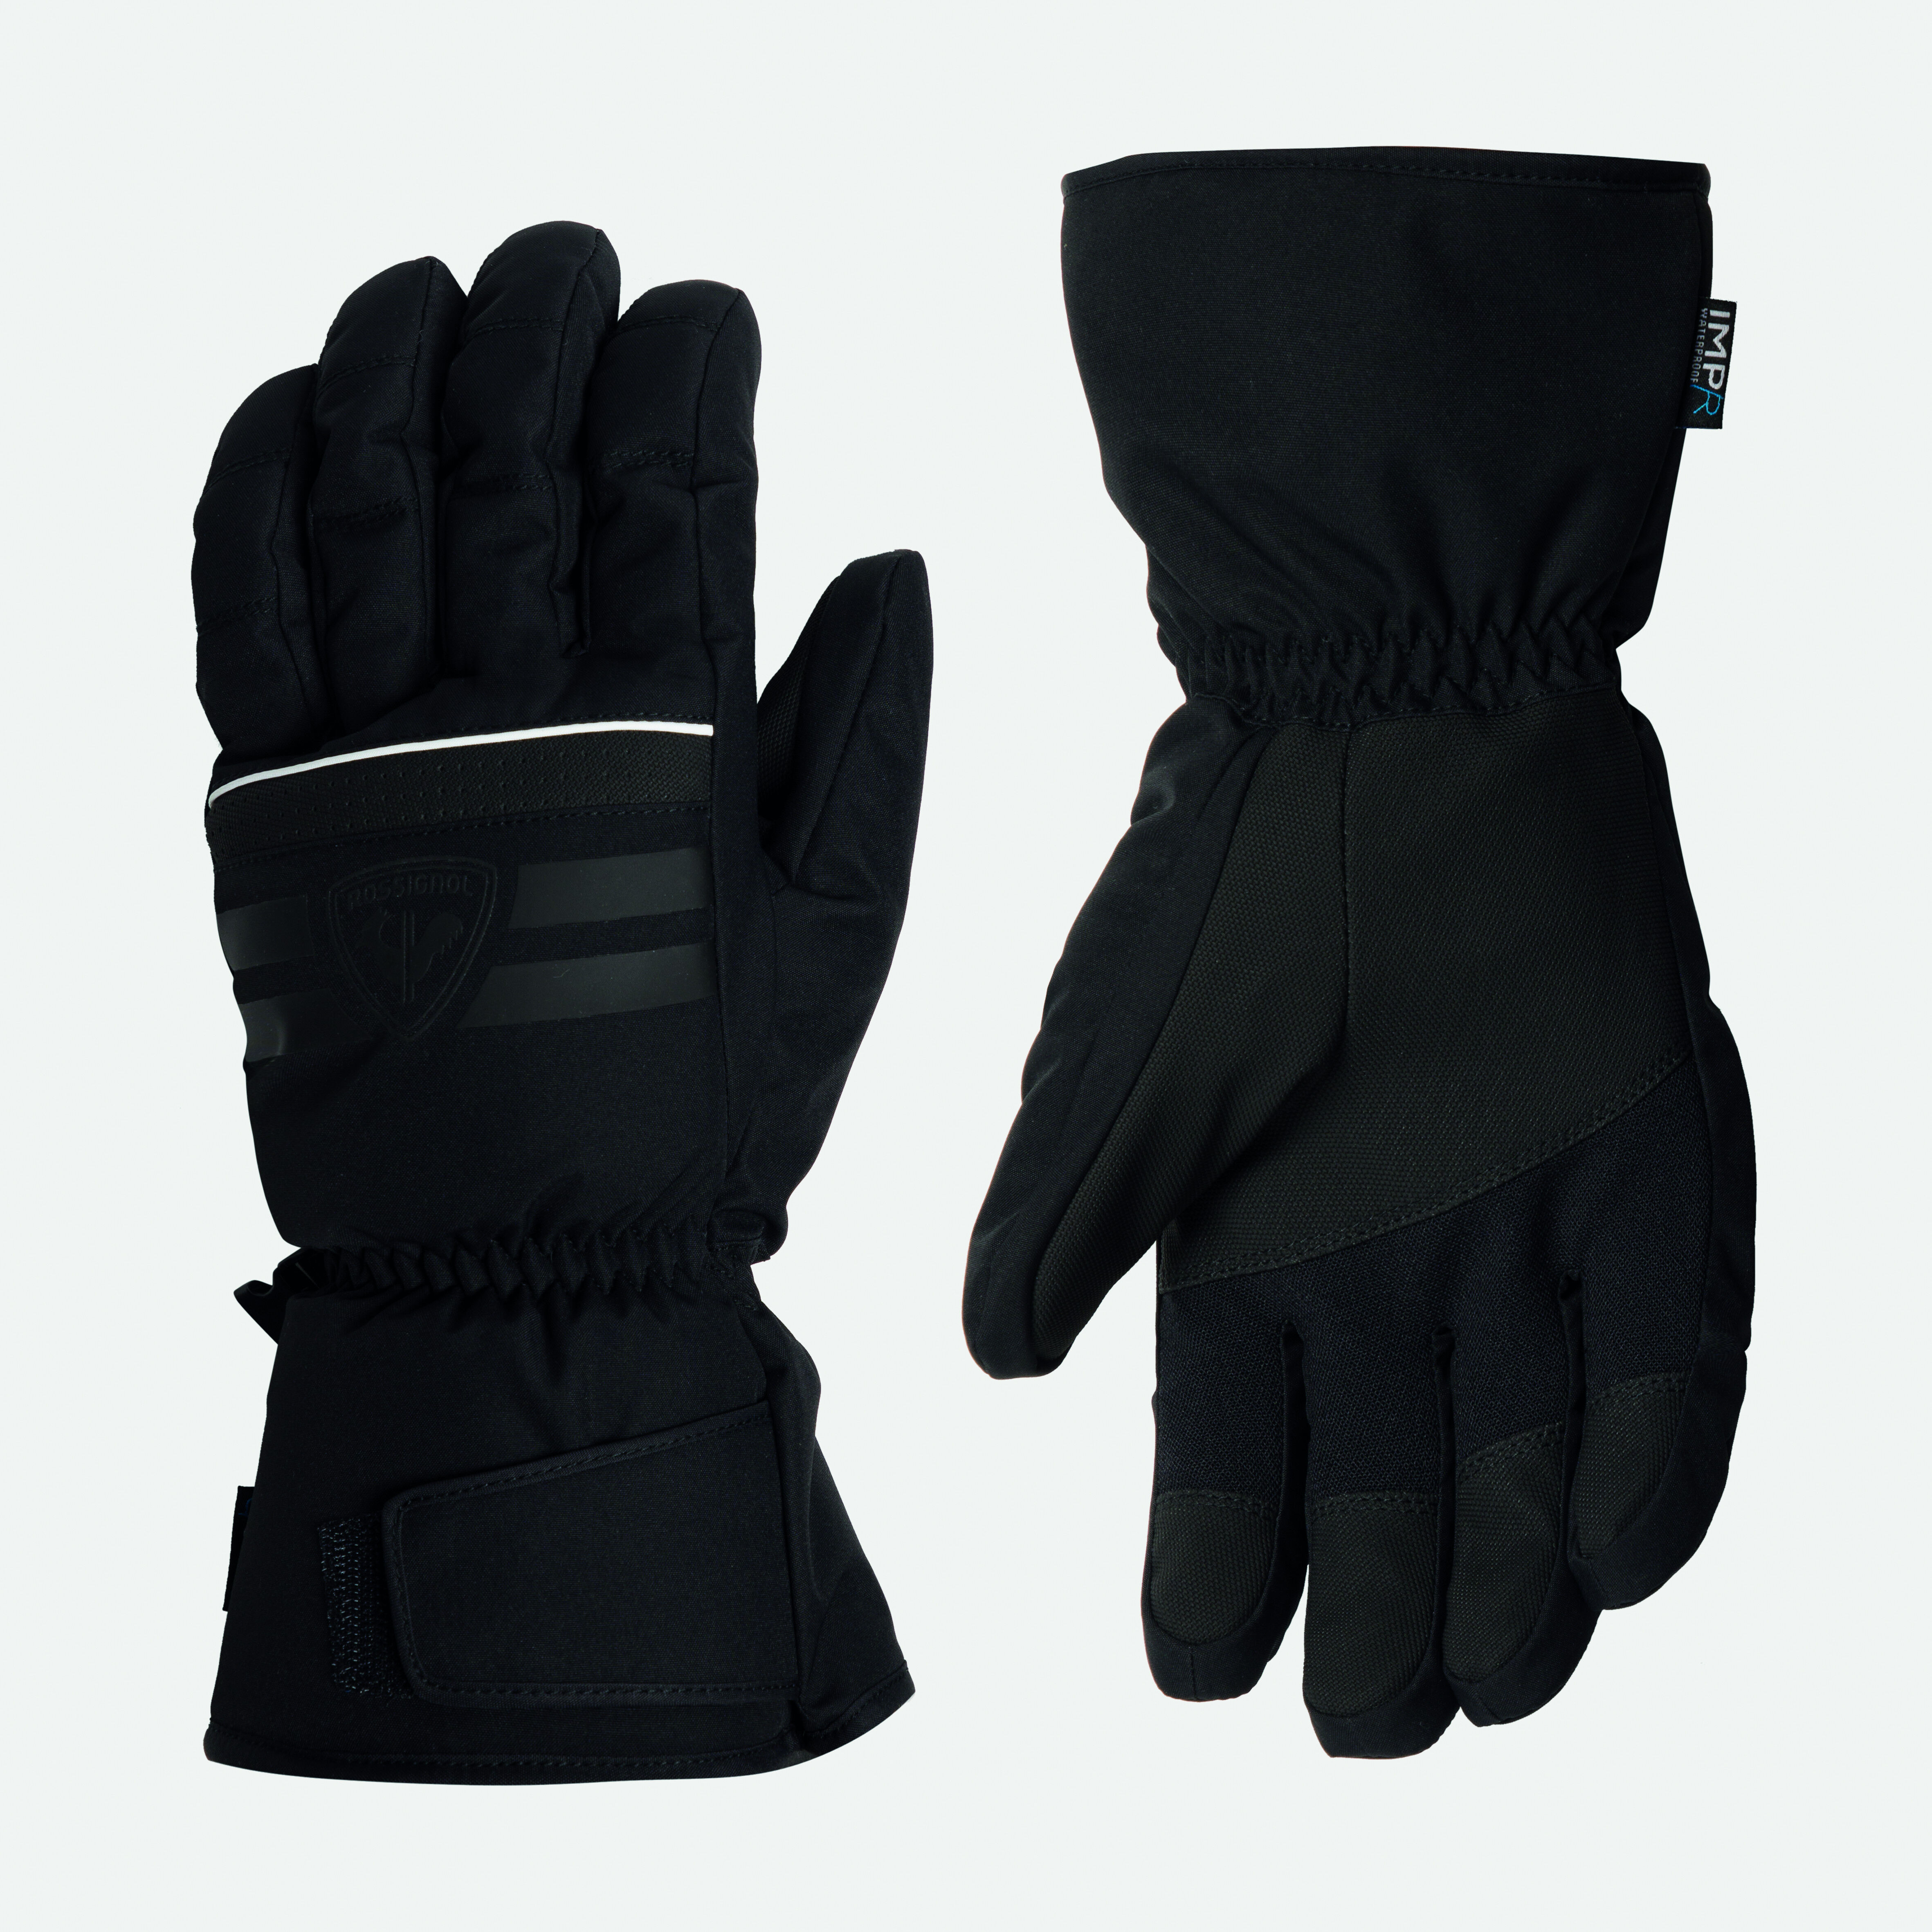 Rossignol Tech Impr - Ski gloves - Men's